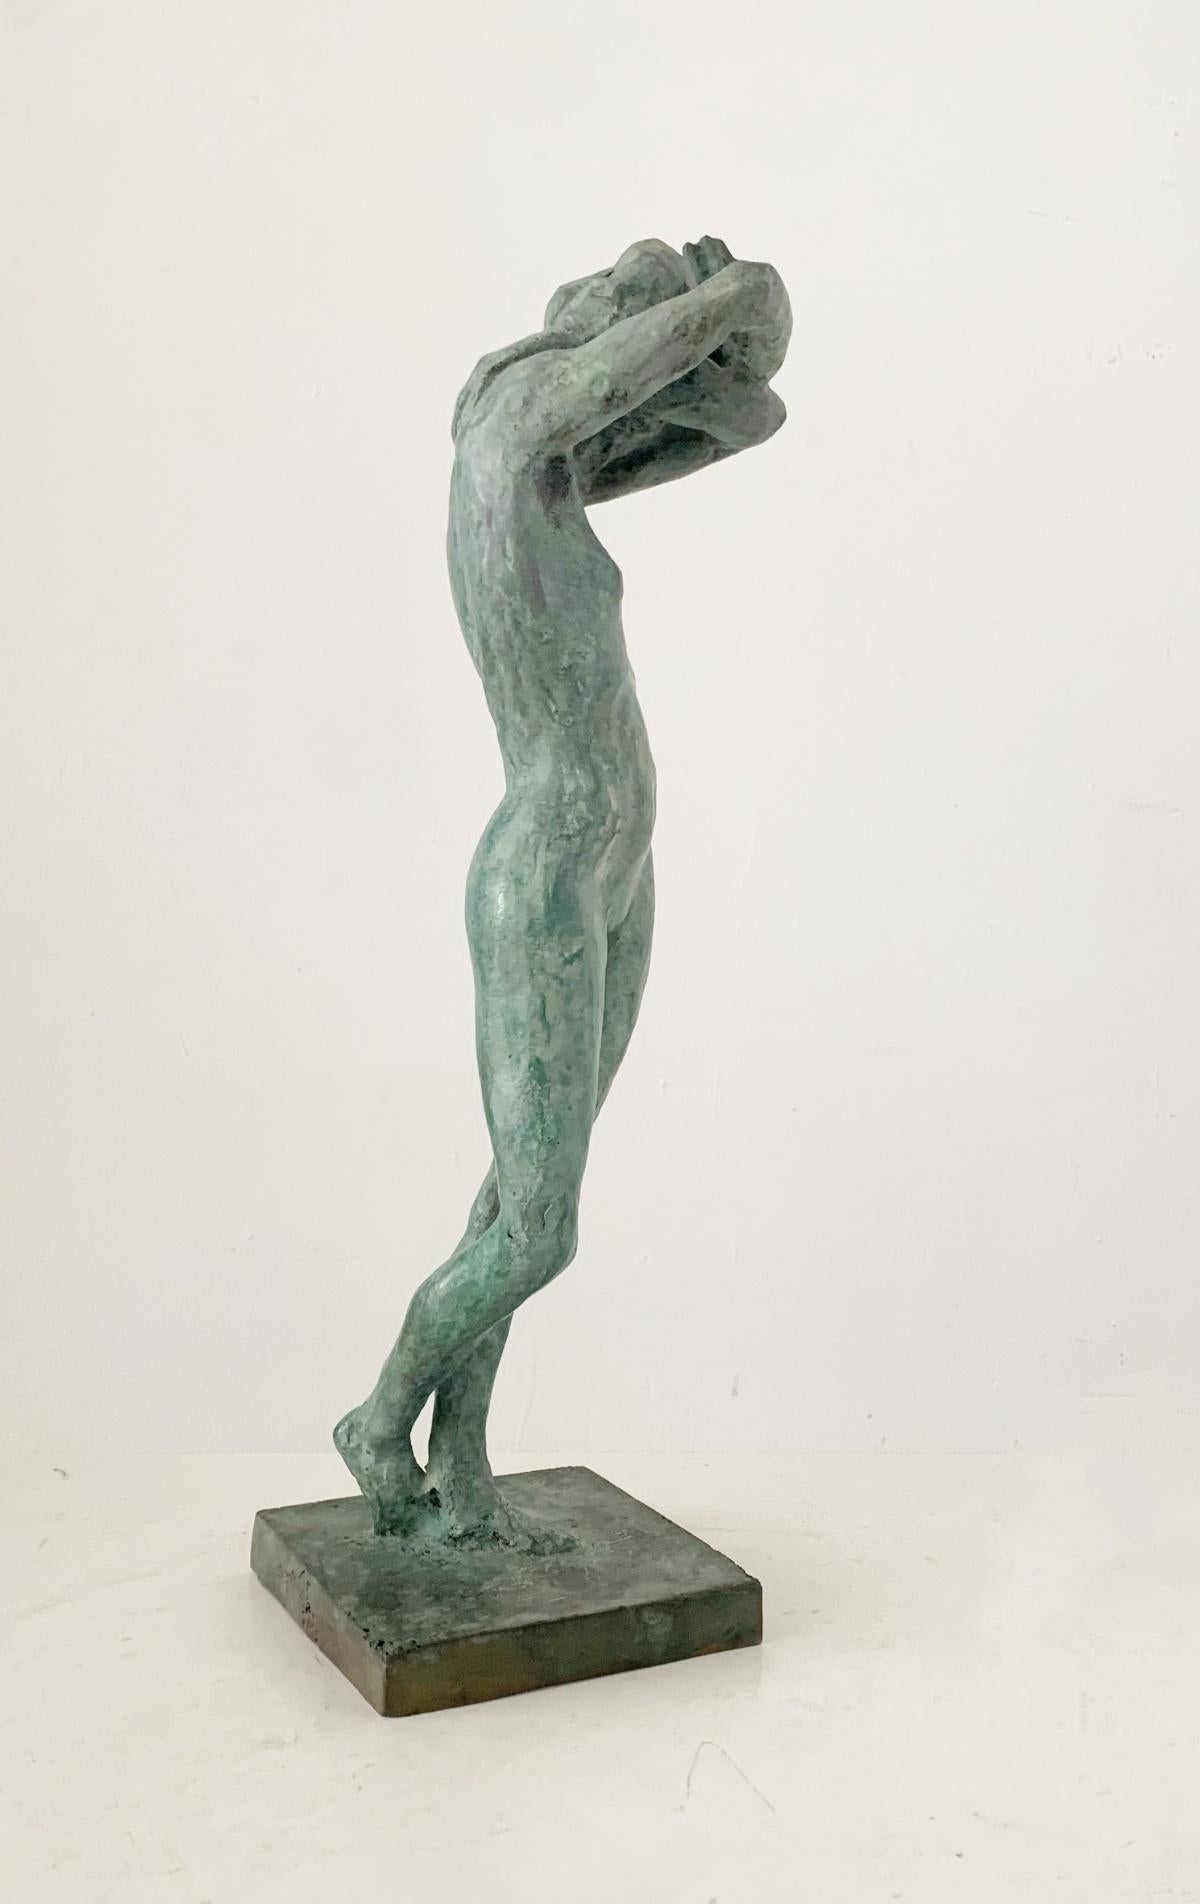 A woman. Contemporary figurative bronze sculpture, Polish art, Limited edition - Sculpture by Olga Prokop-Misniakiewicz